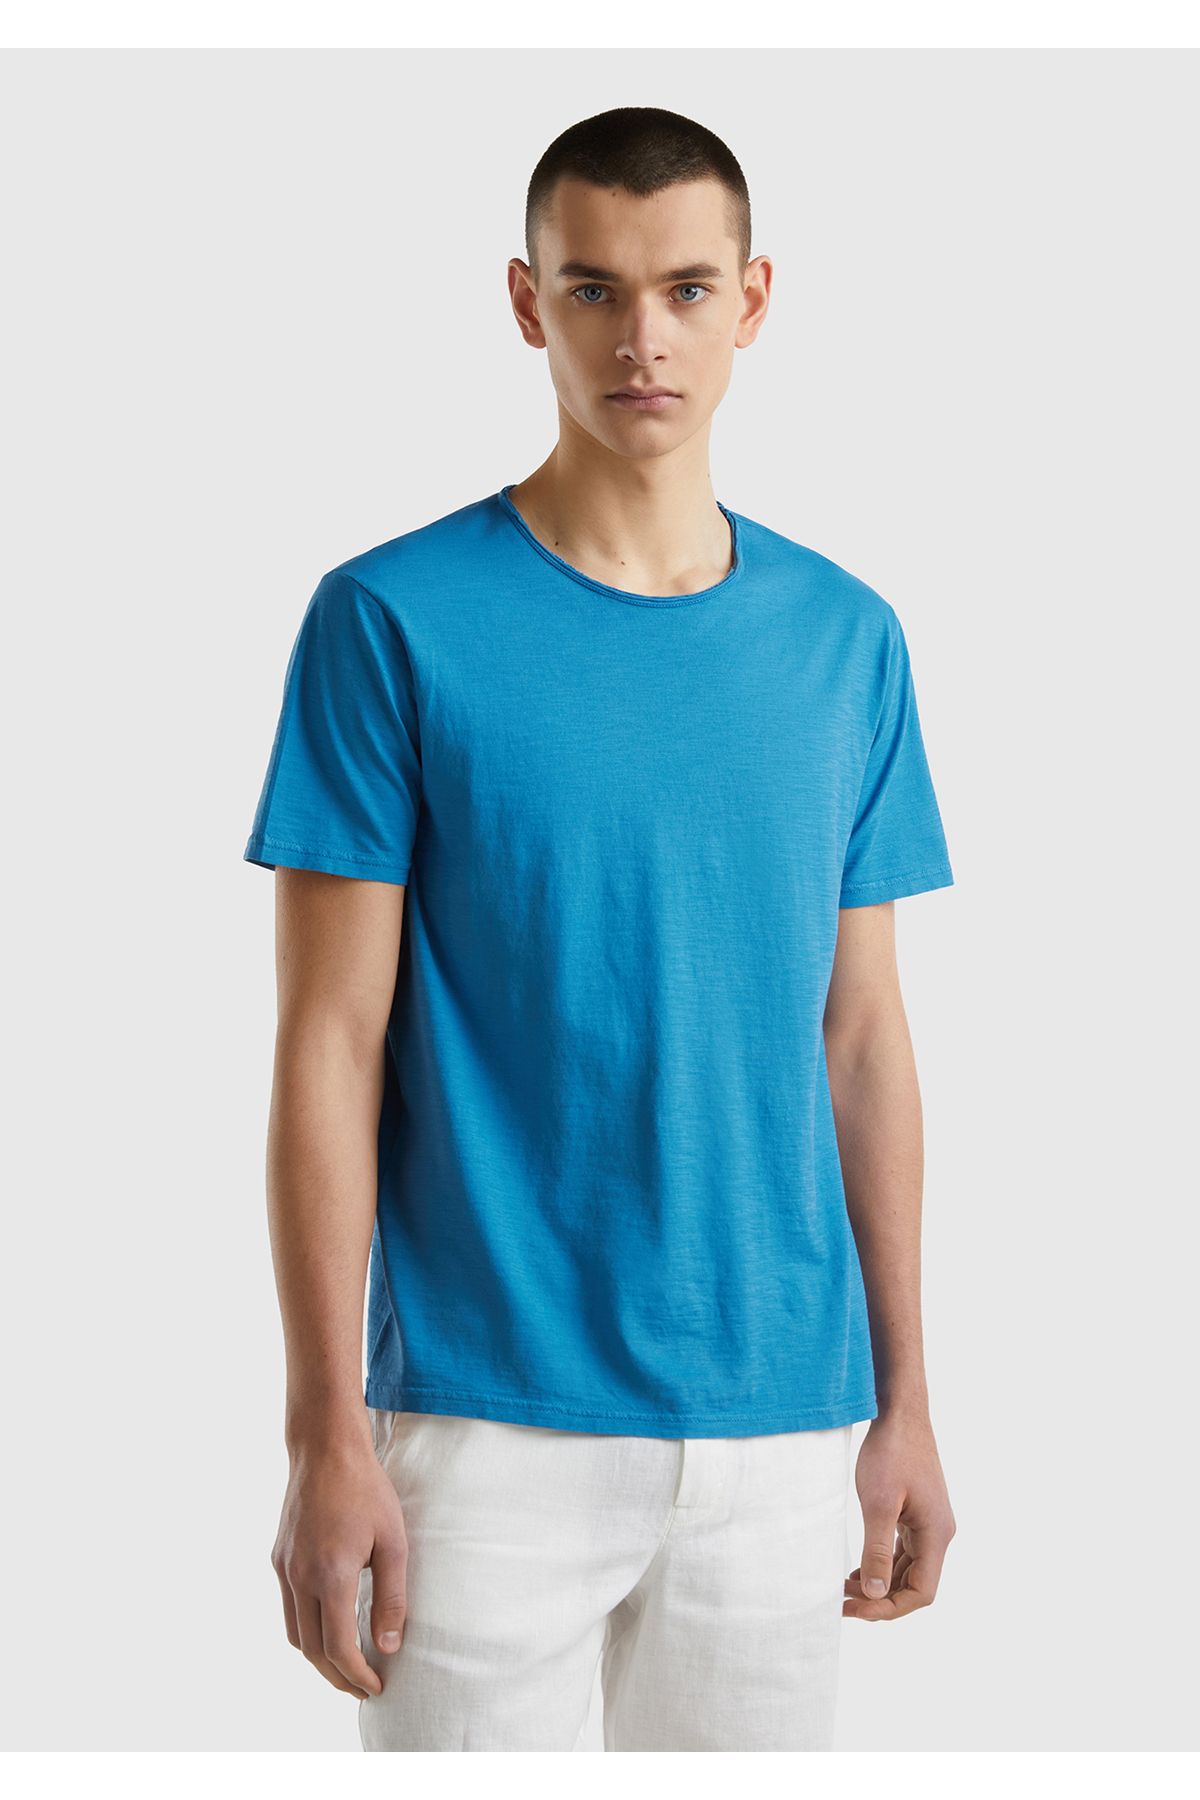 United Colors of Benetton Erkek Koyu Mavi Bisiklet Yaka Slub T-shirt